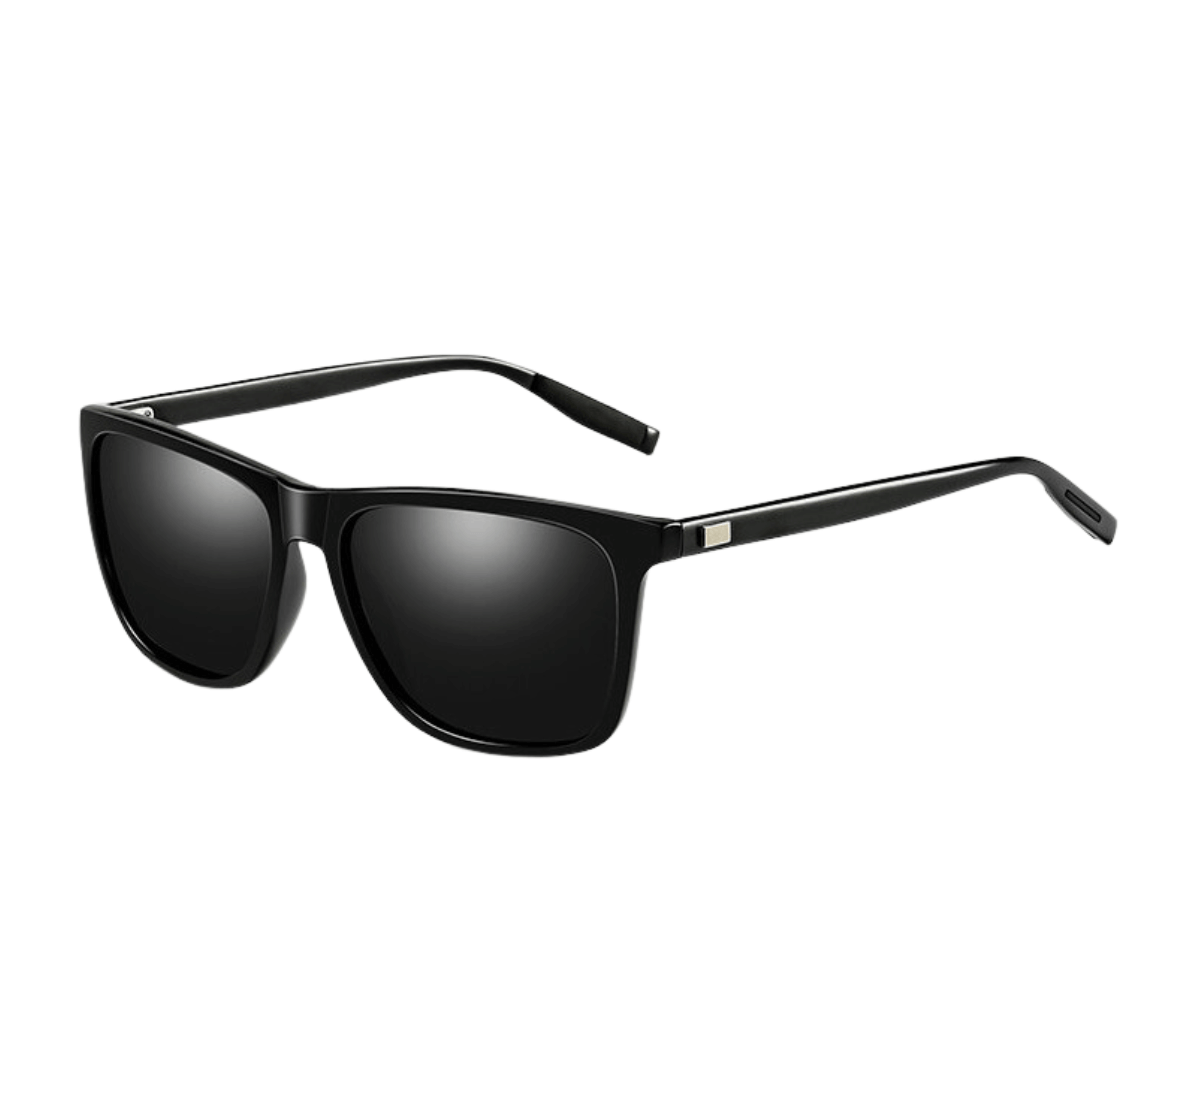 bulk plastic sunglasses wholesale, wholesale vintage sunglasses, China Sunglasses Manufacturer, wholesale eyewear suppliers